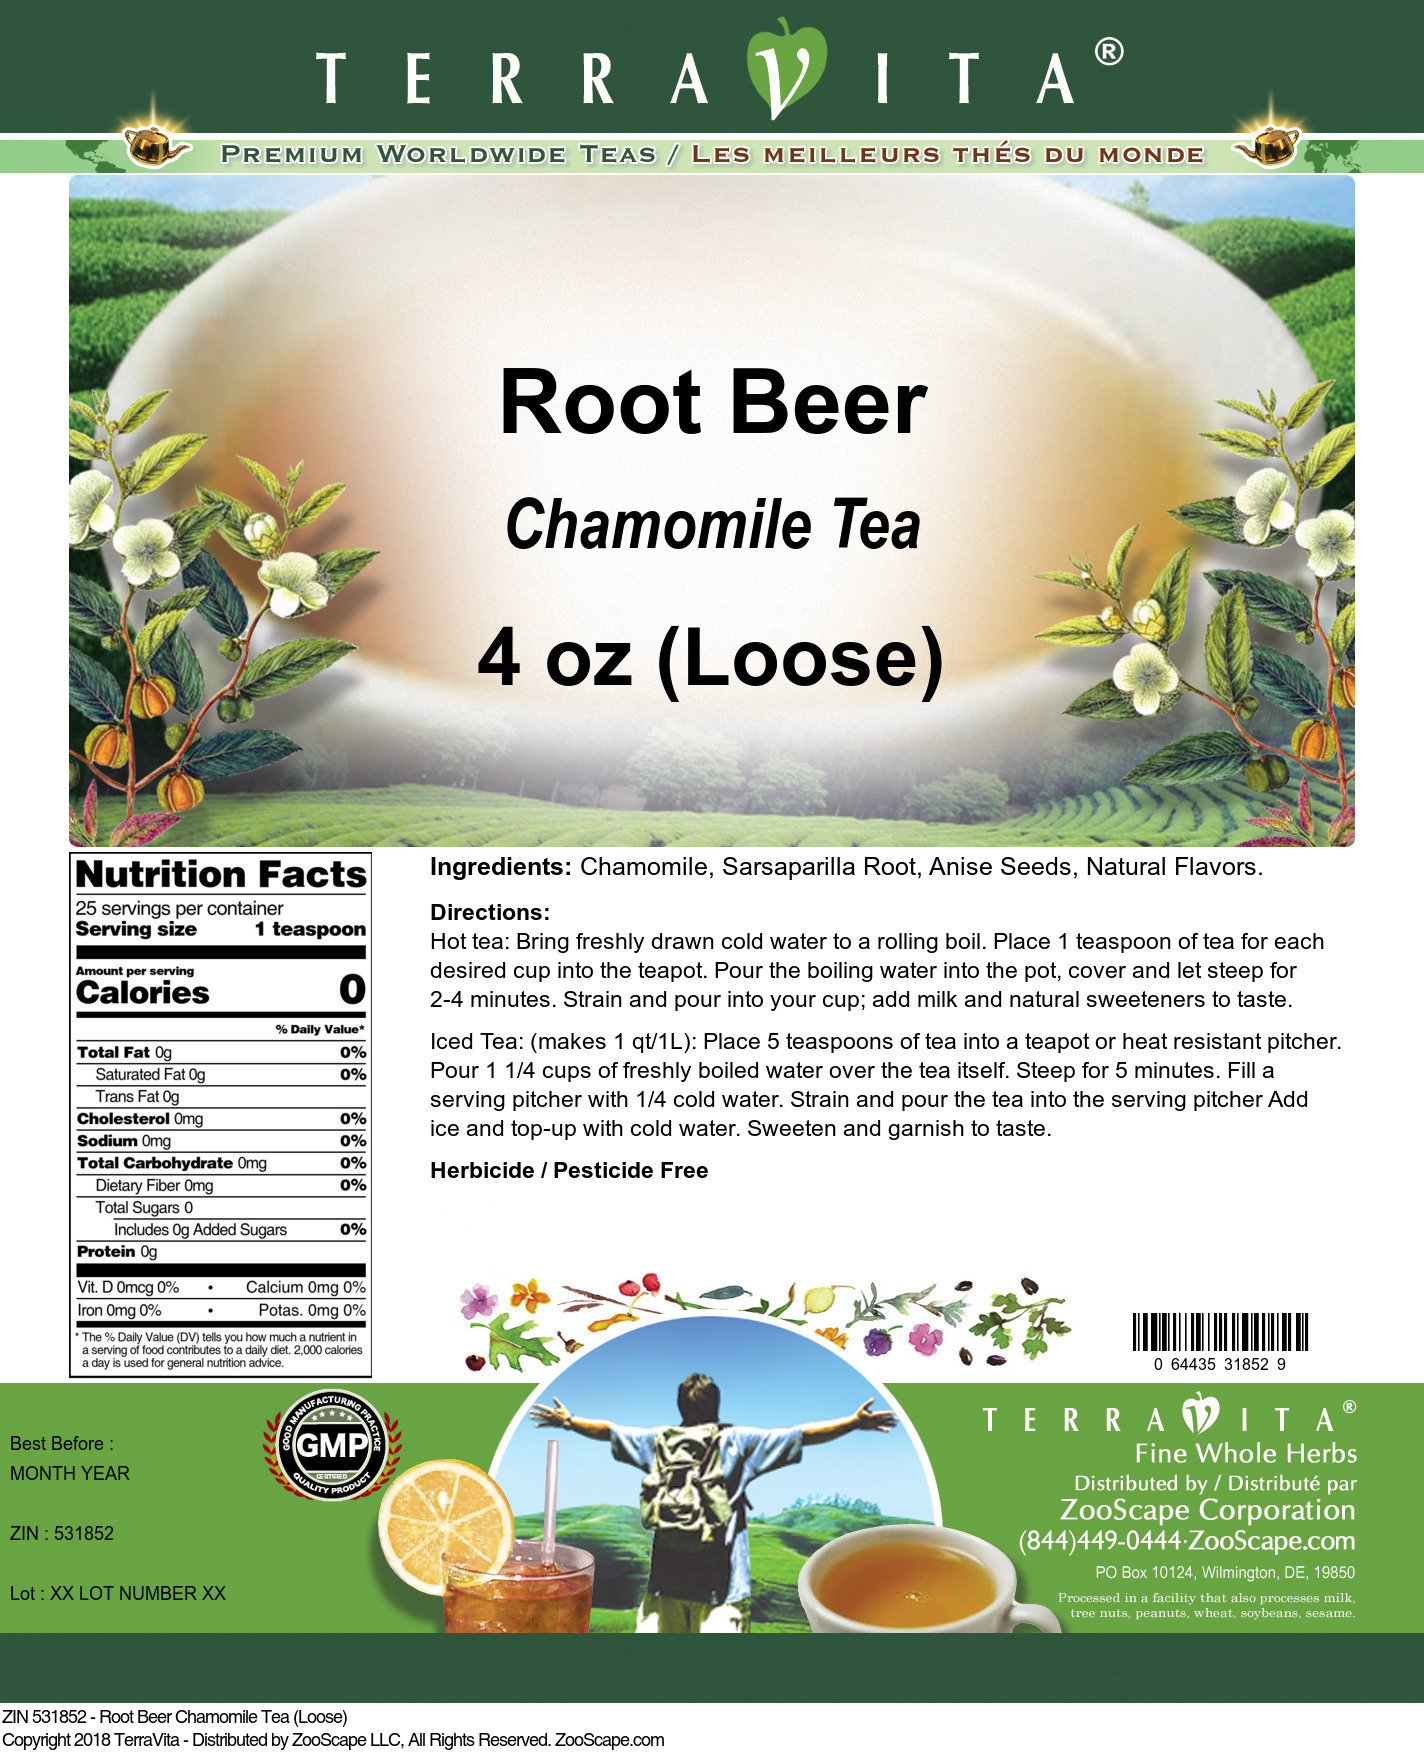 Root Beer Chamomile Tea (Loose) - Label